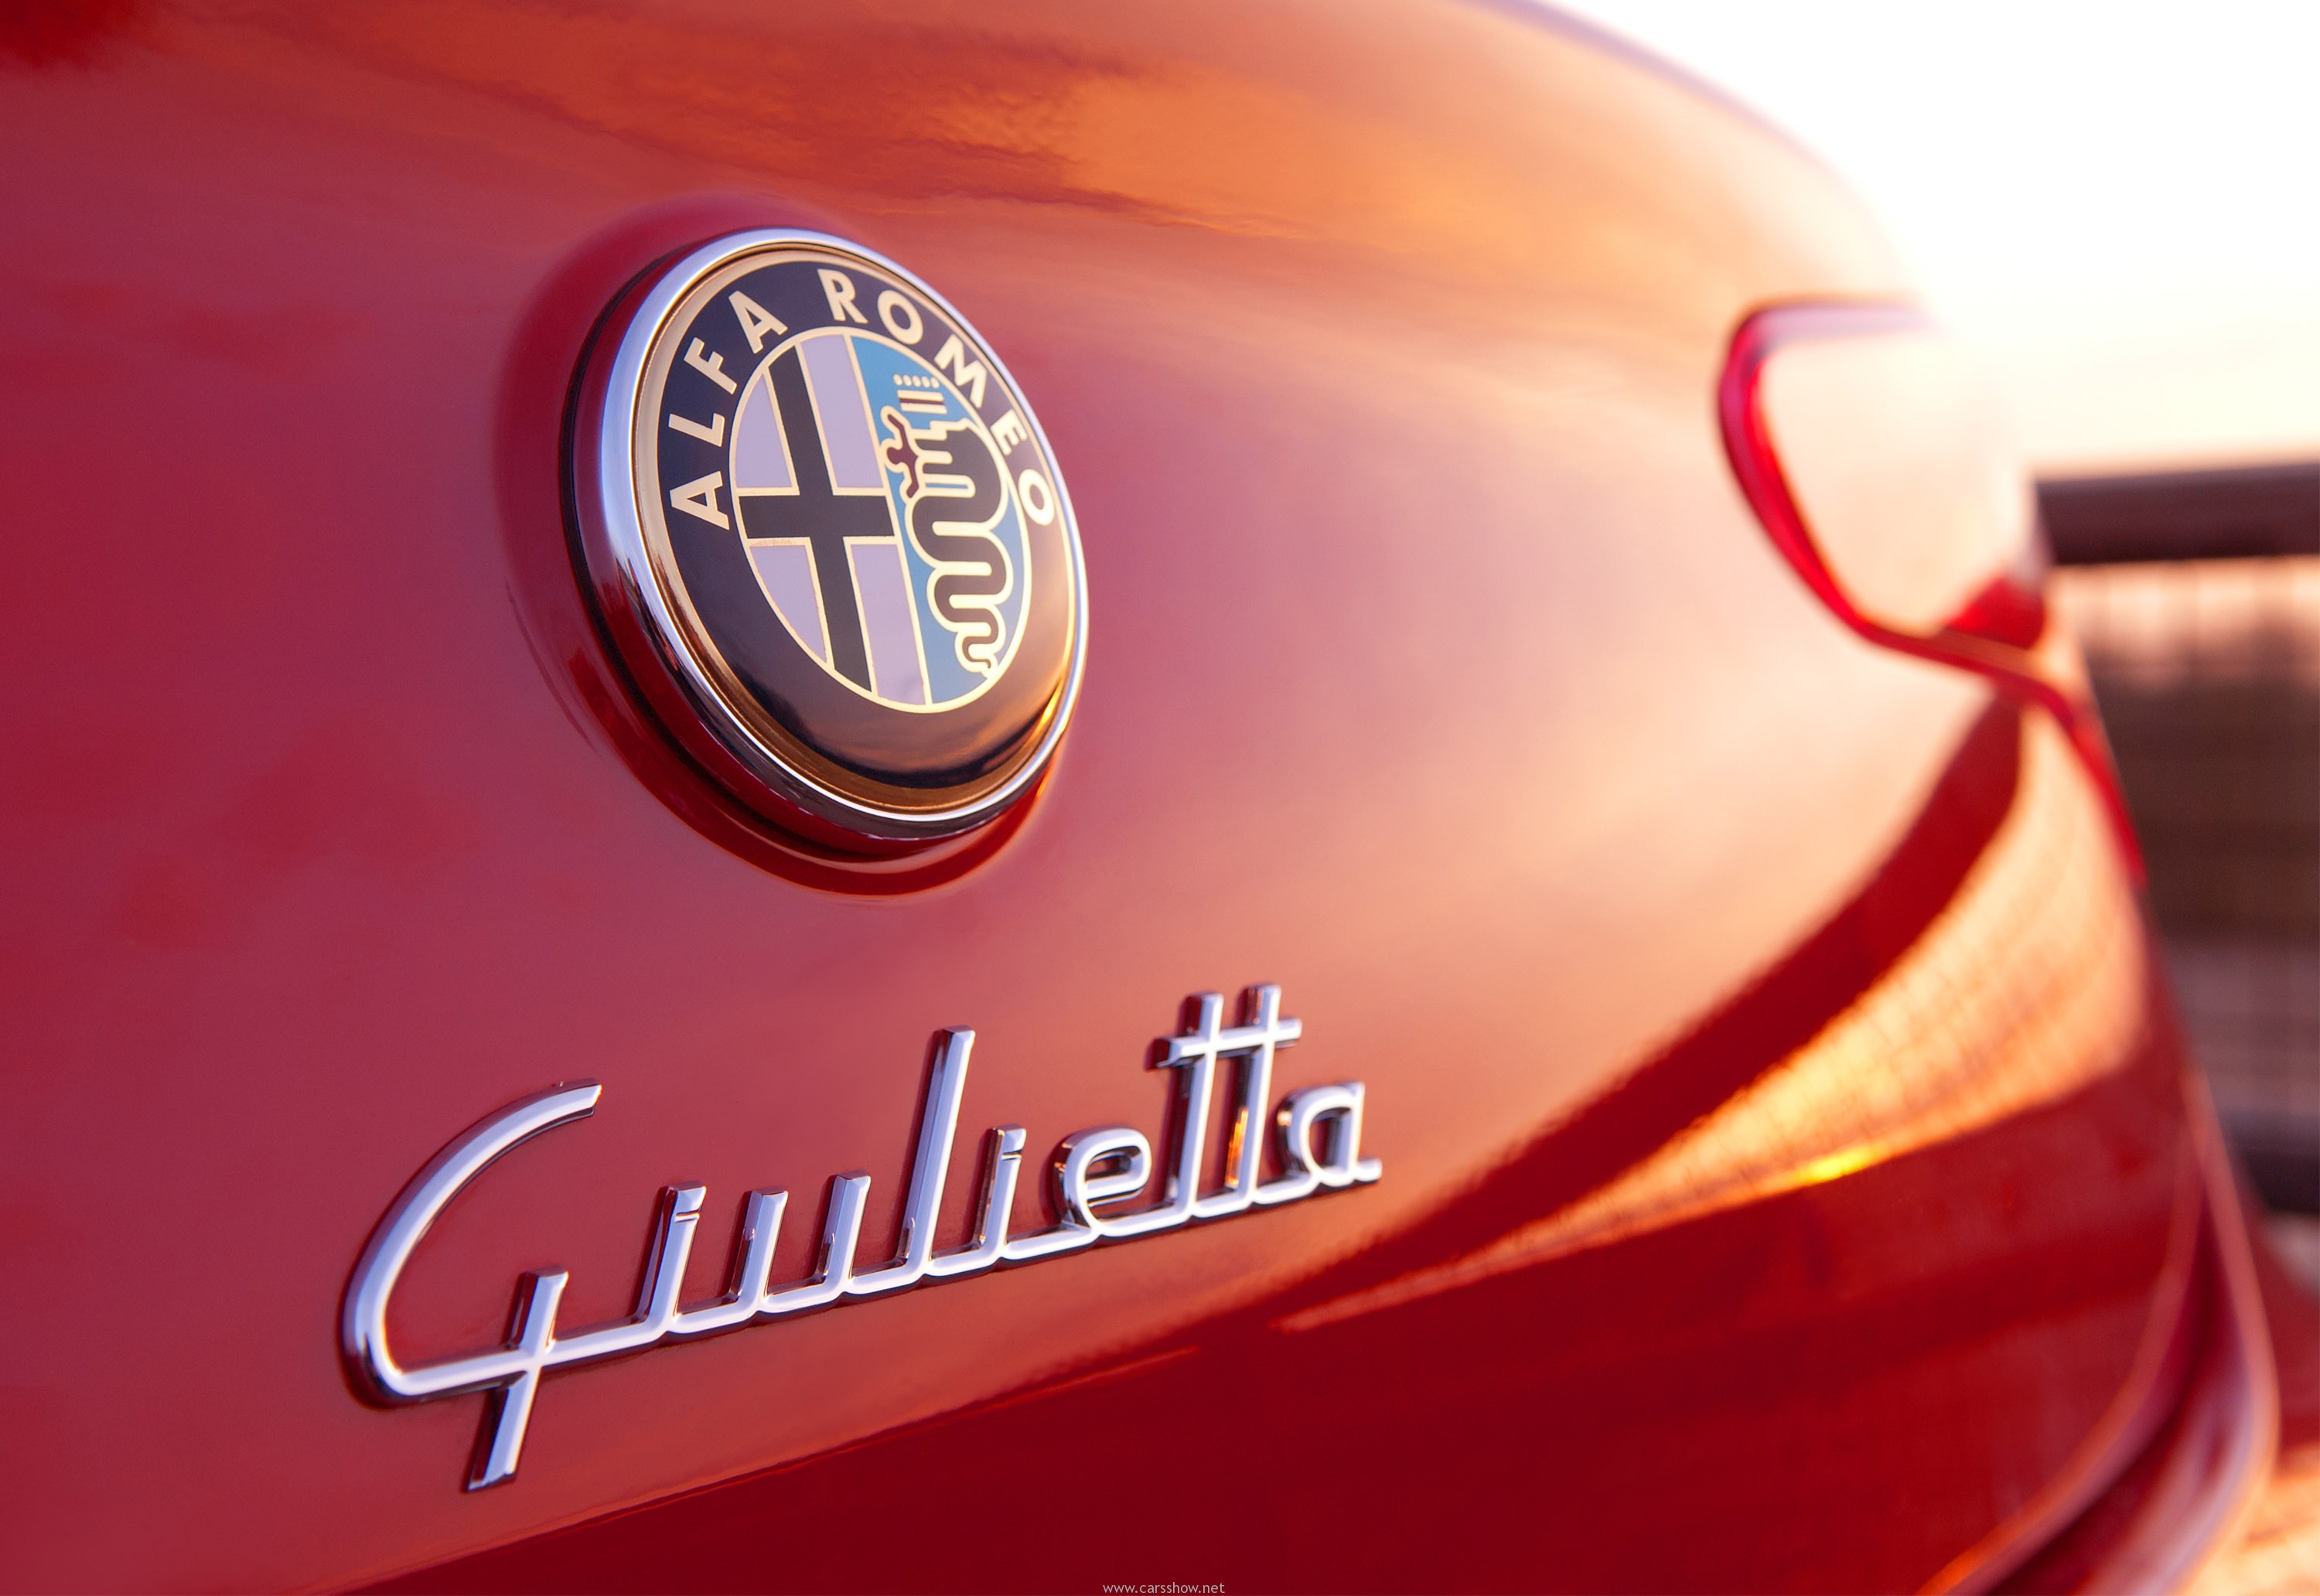 The 2017 Alfa Romeo Giulia starts under $38,000 - CNET